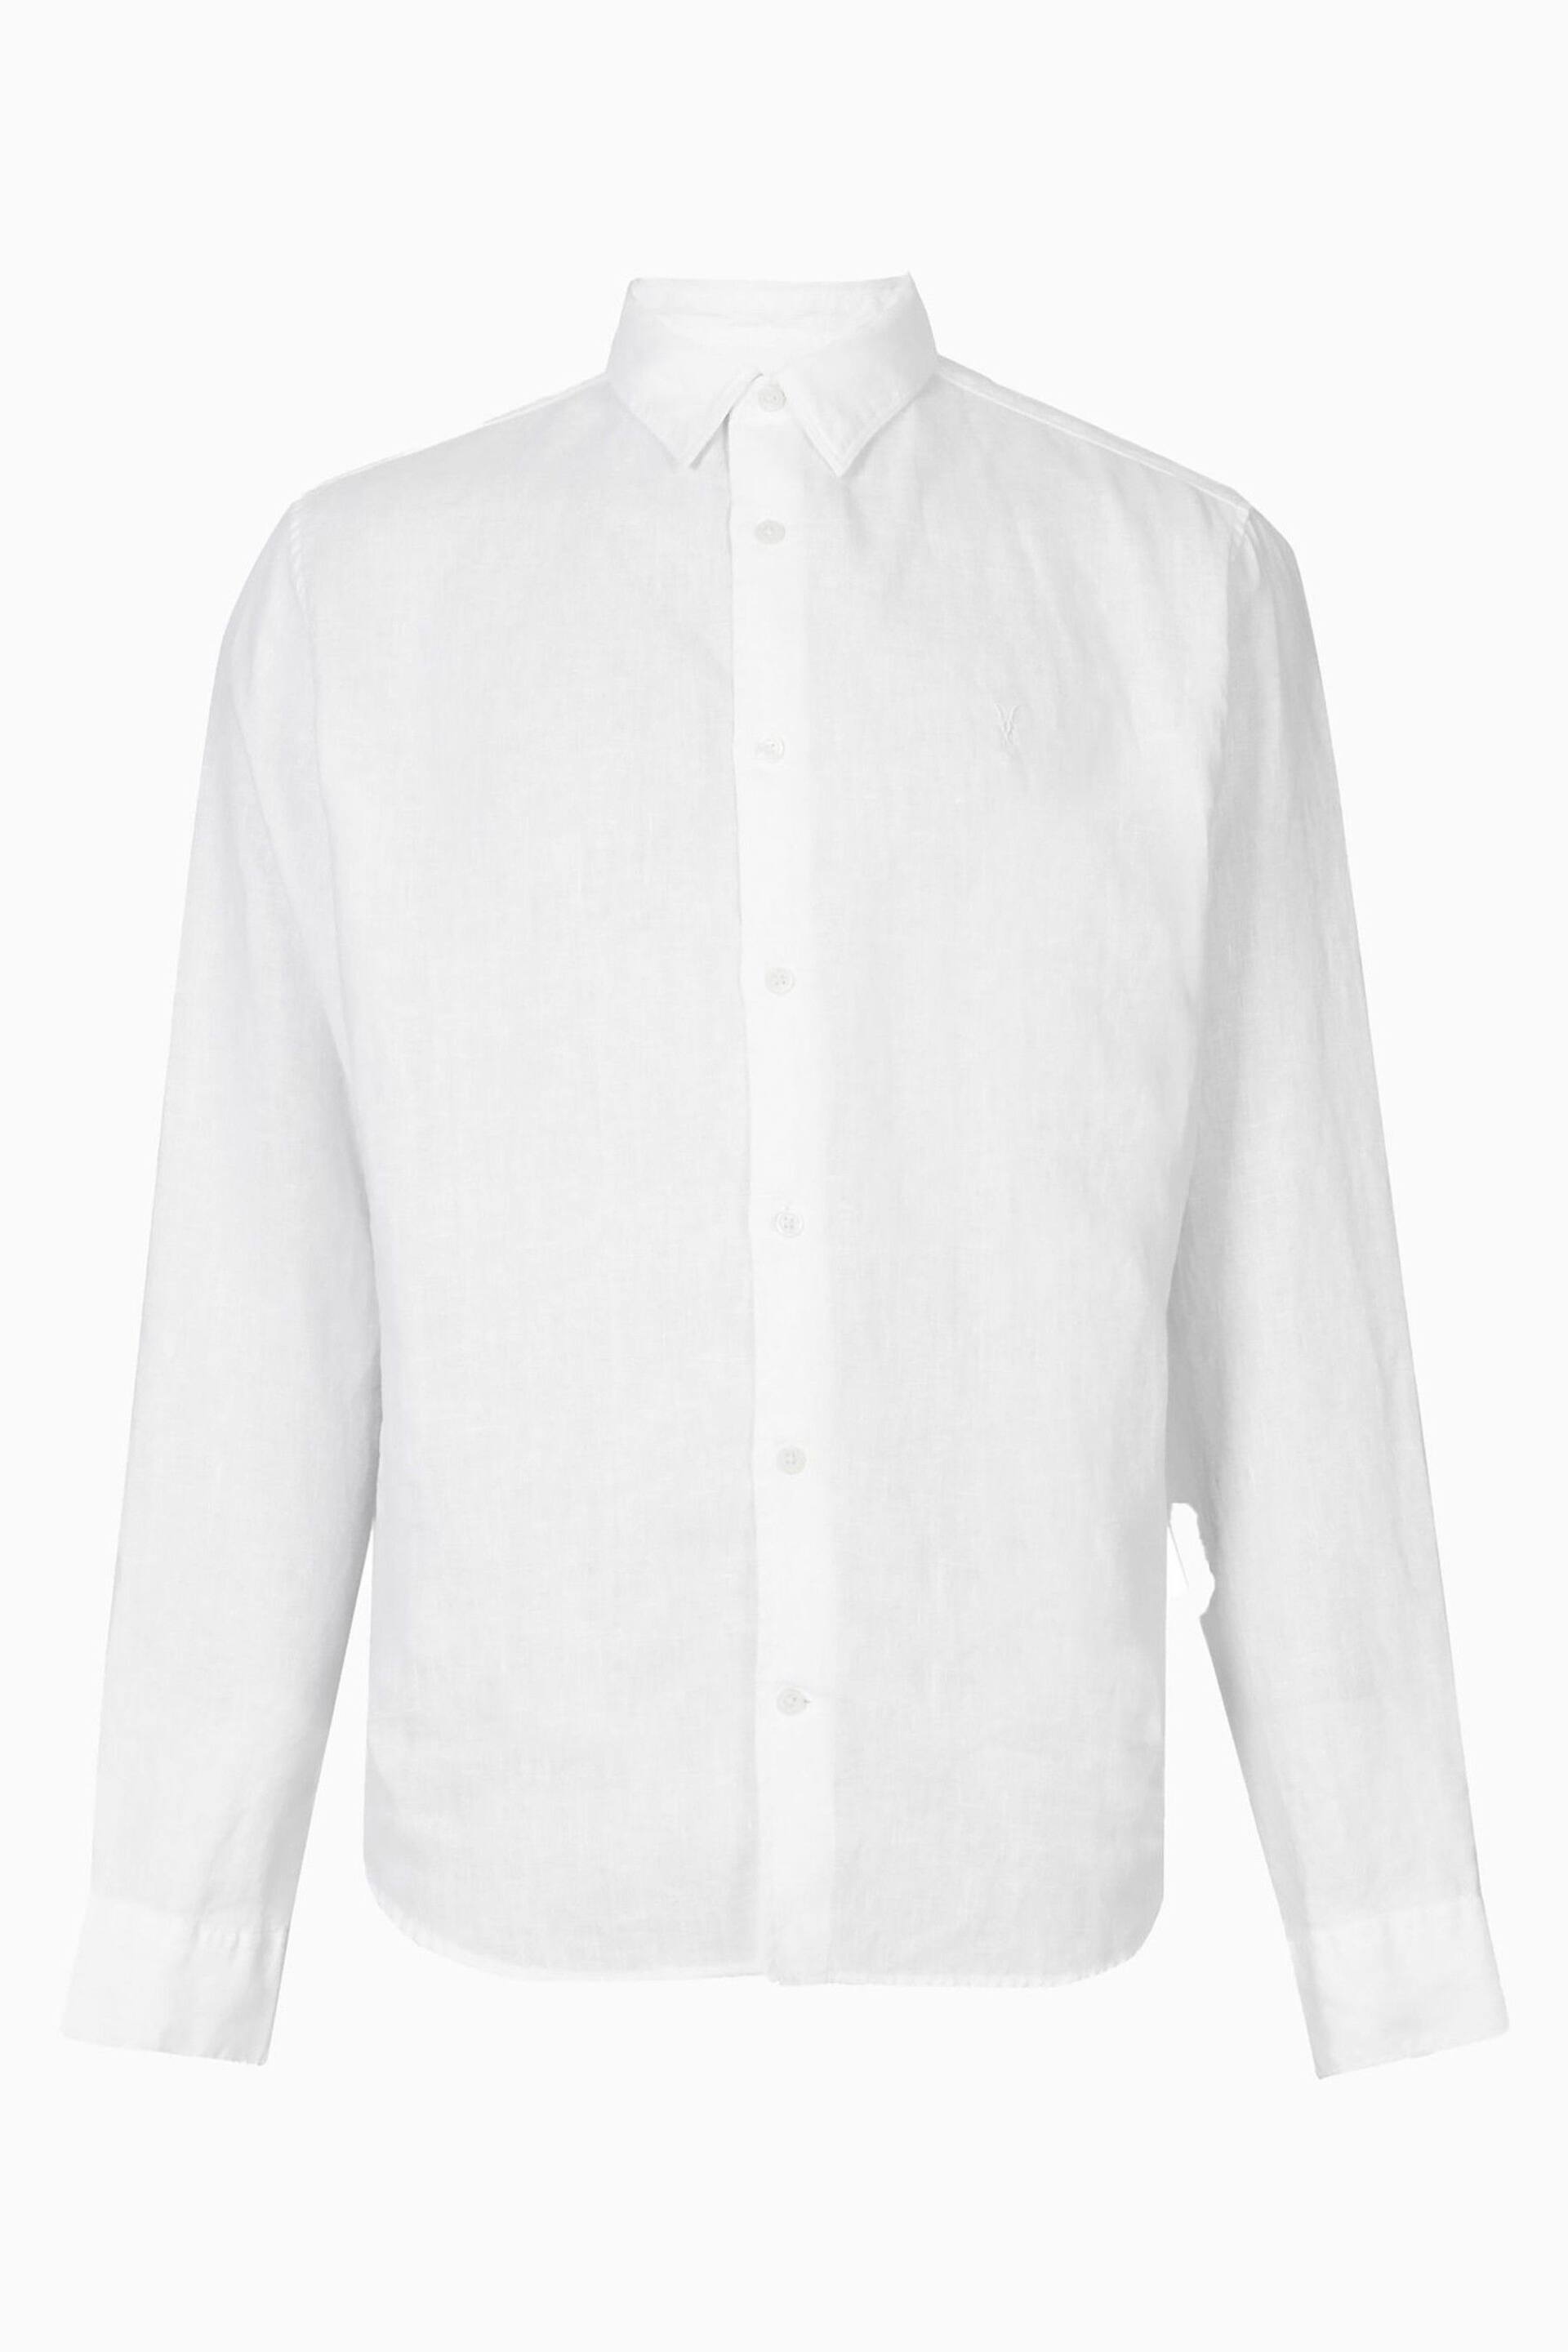 AllSaints White Cypress Long Sleeve Shirt - Image 8 of 8